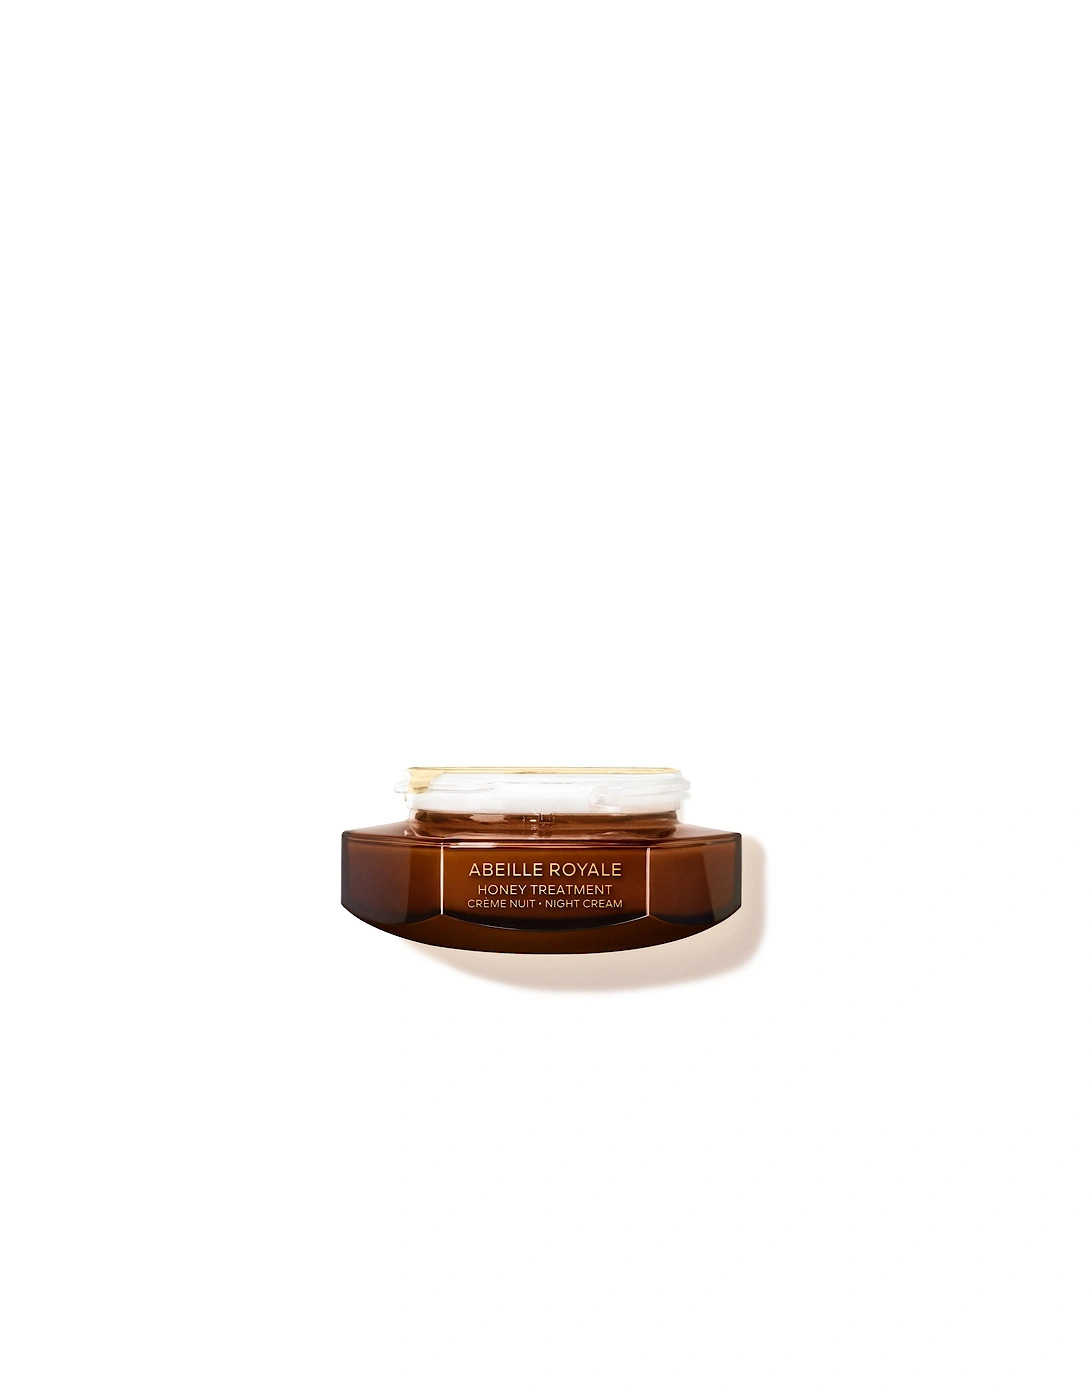 Abeille Royale Honey Treatment Night Cream - The Refill 50ml, 2 of 1